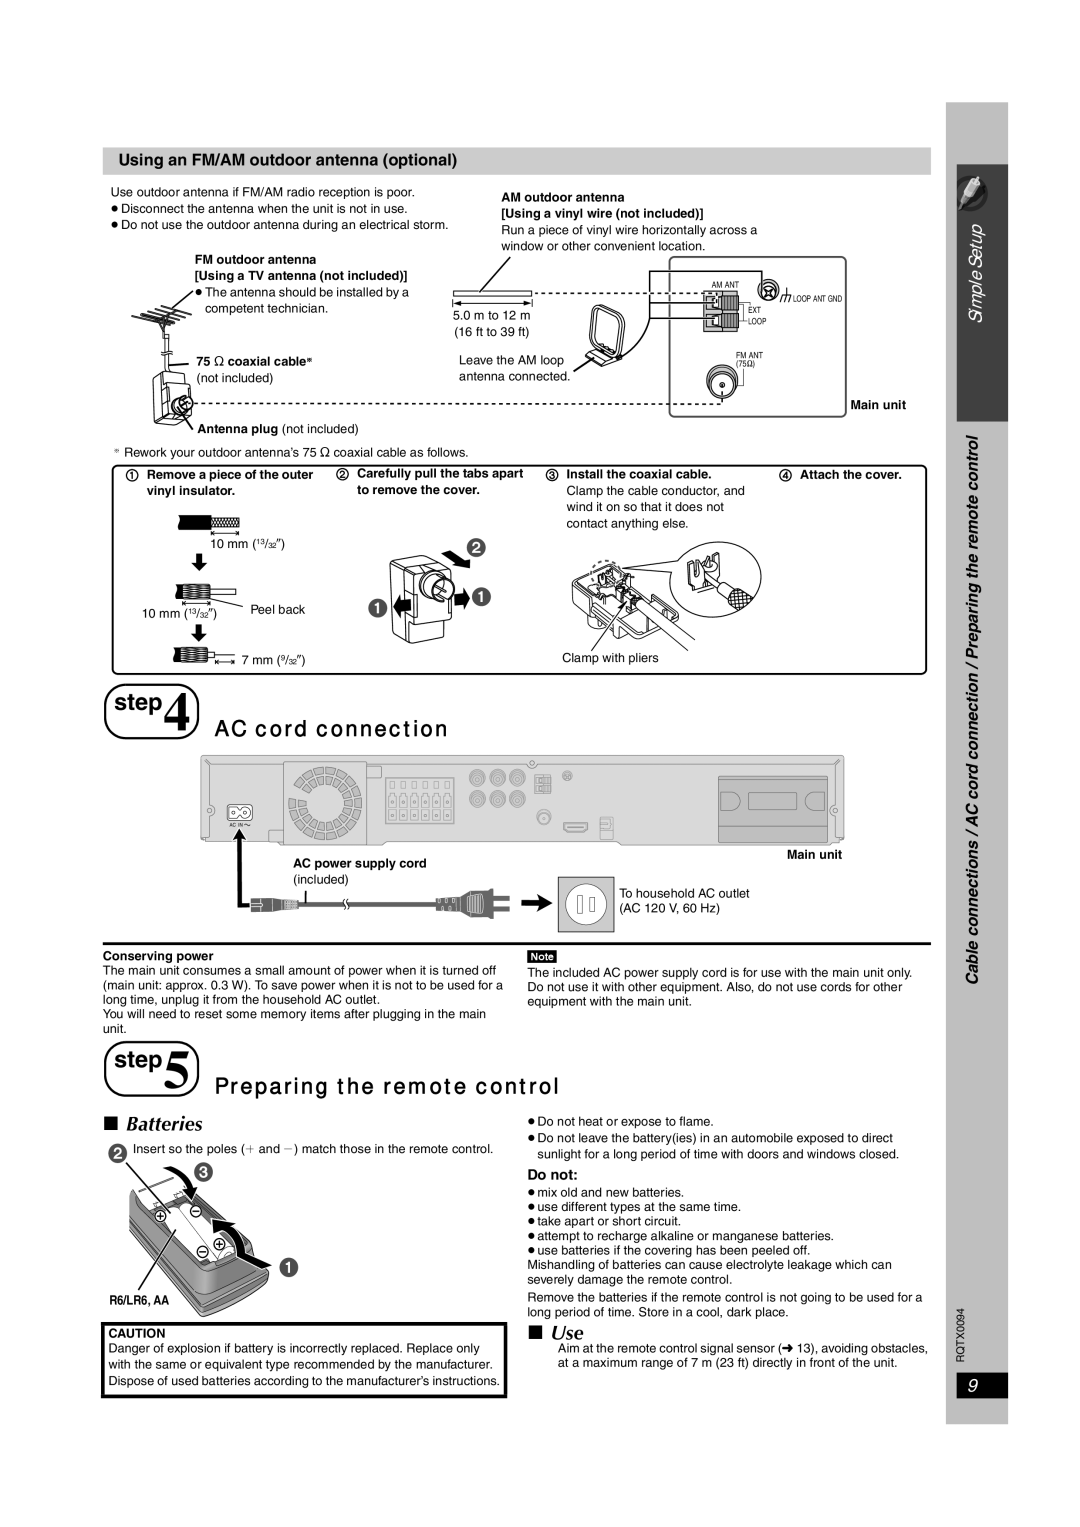 Panasonic SC-PT754, SC-PT660 manual AC cord connection, Preparing the remote control, Batteries, Use, Simple Setup 